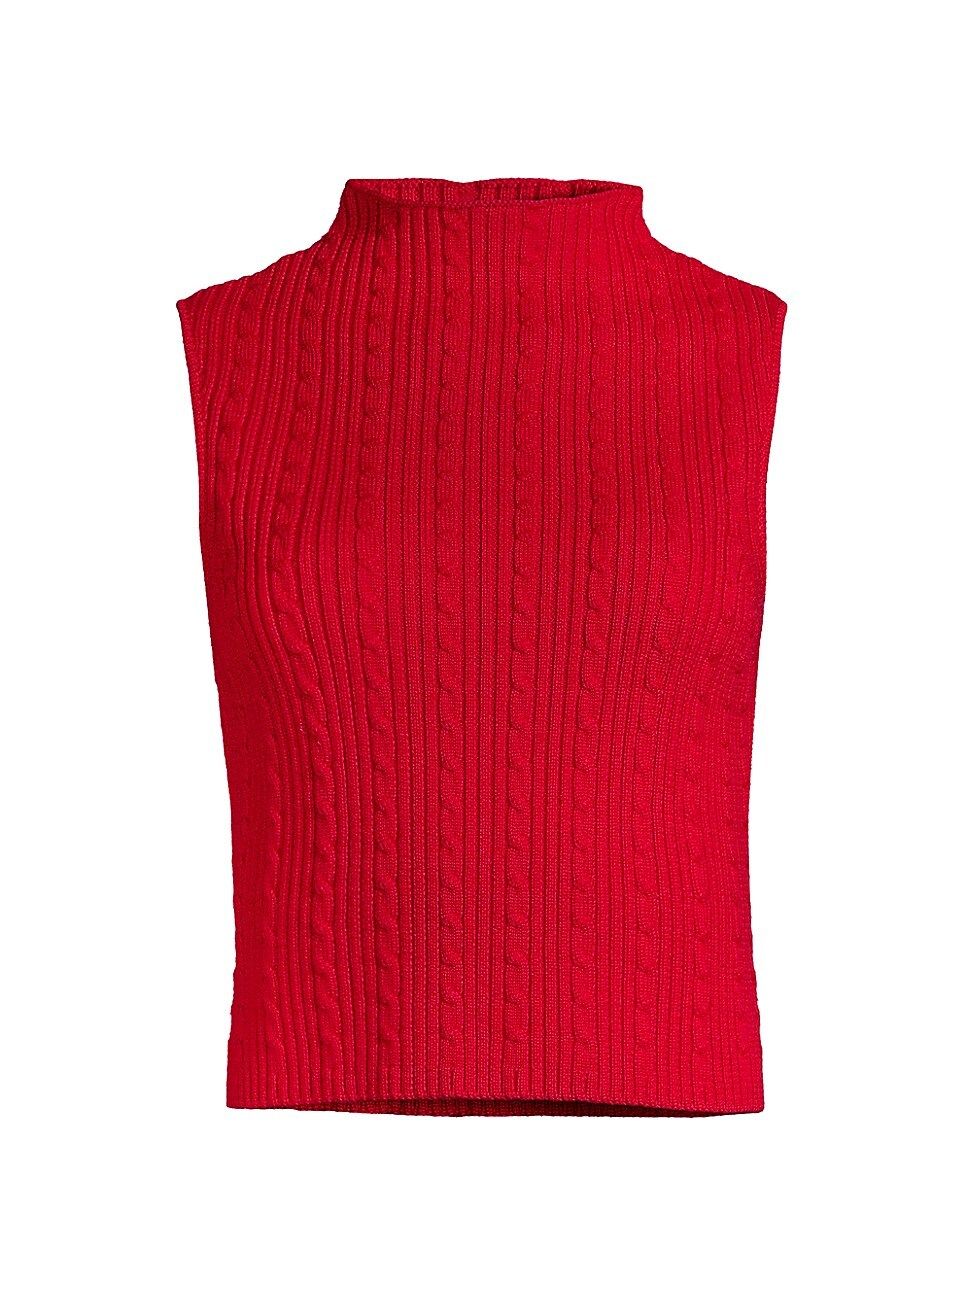 Women's Sleeveless Turtleneck Sweater - Red - Size XL | Saks Fifth Avenue